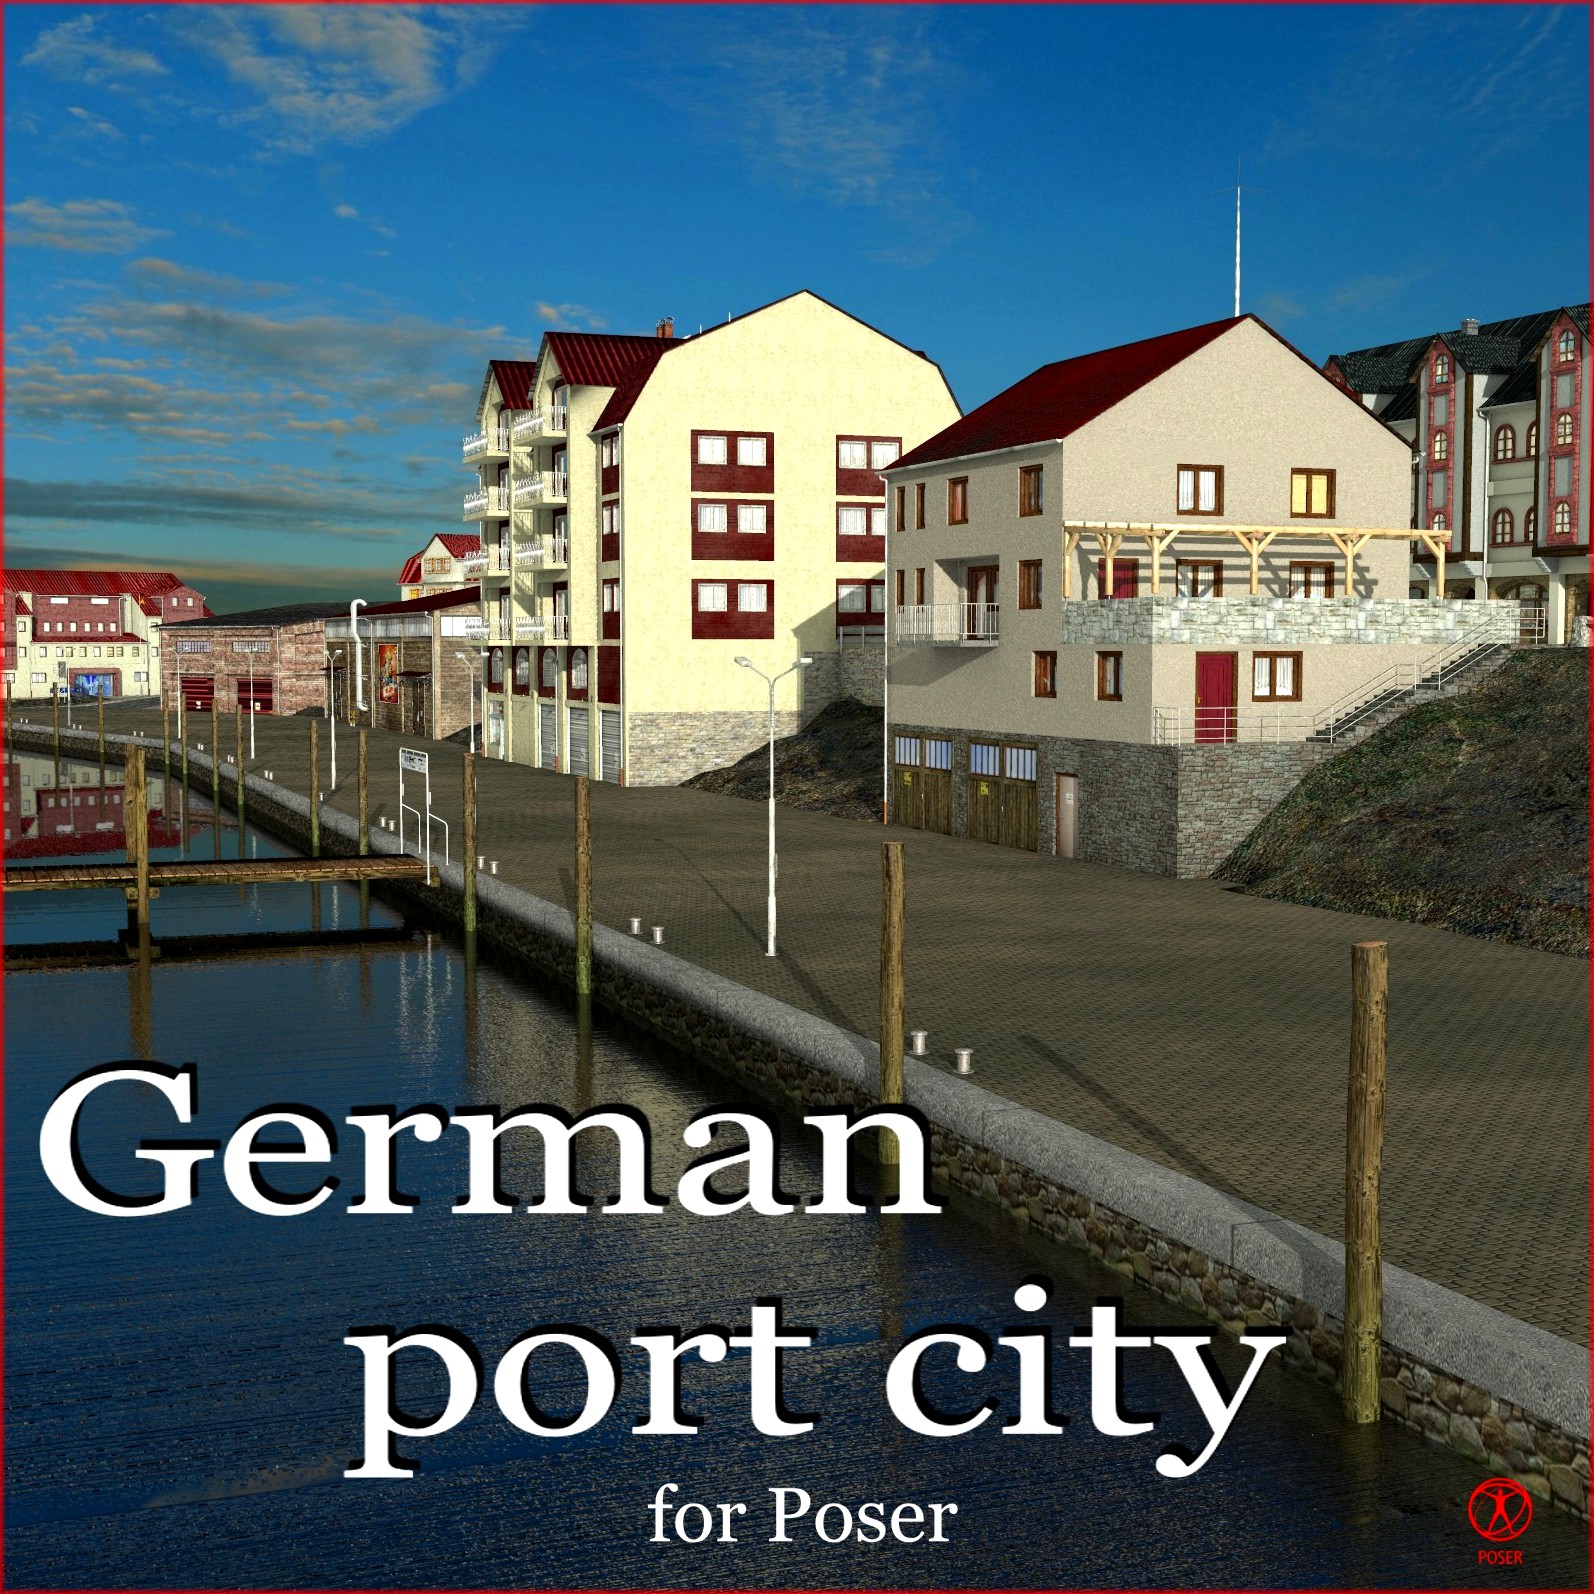 German port city